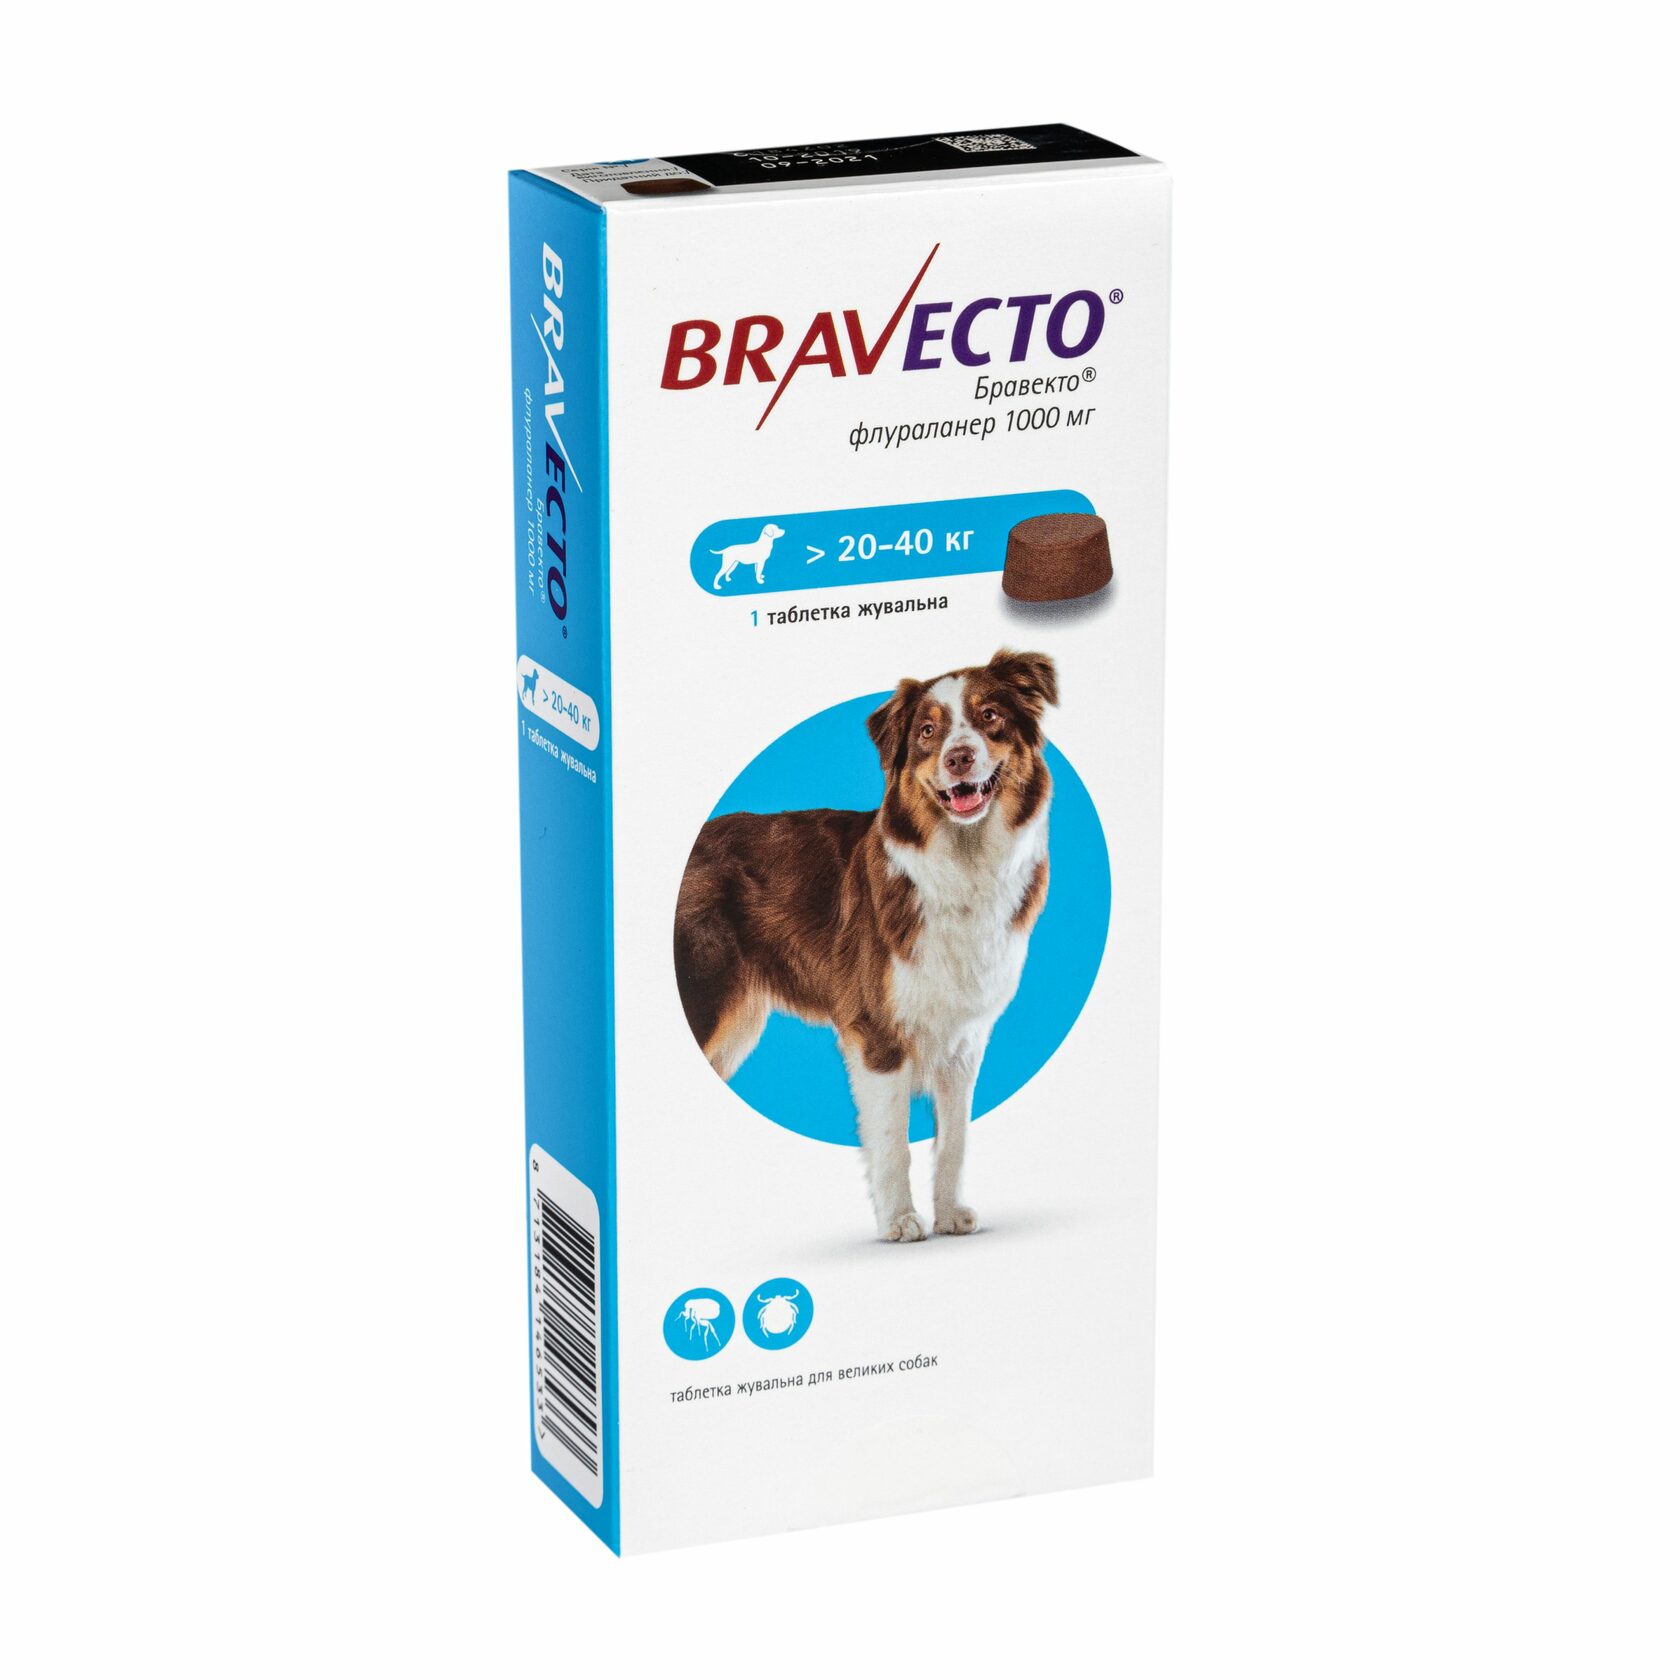 Bravecto для собак 20 40кг. Бравекто (MSD animal Health). Таблетки клещей для собак Бравекто. Бравекто для собак 20-40. Бравекто для собак 20-40 кг 1000 мг.